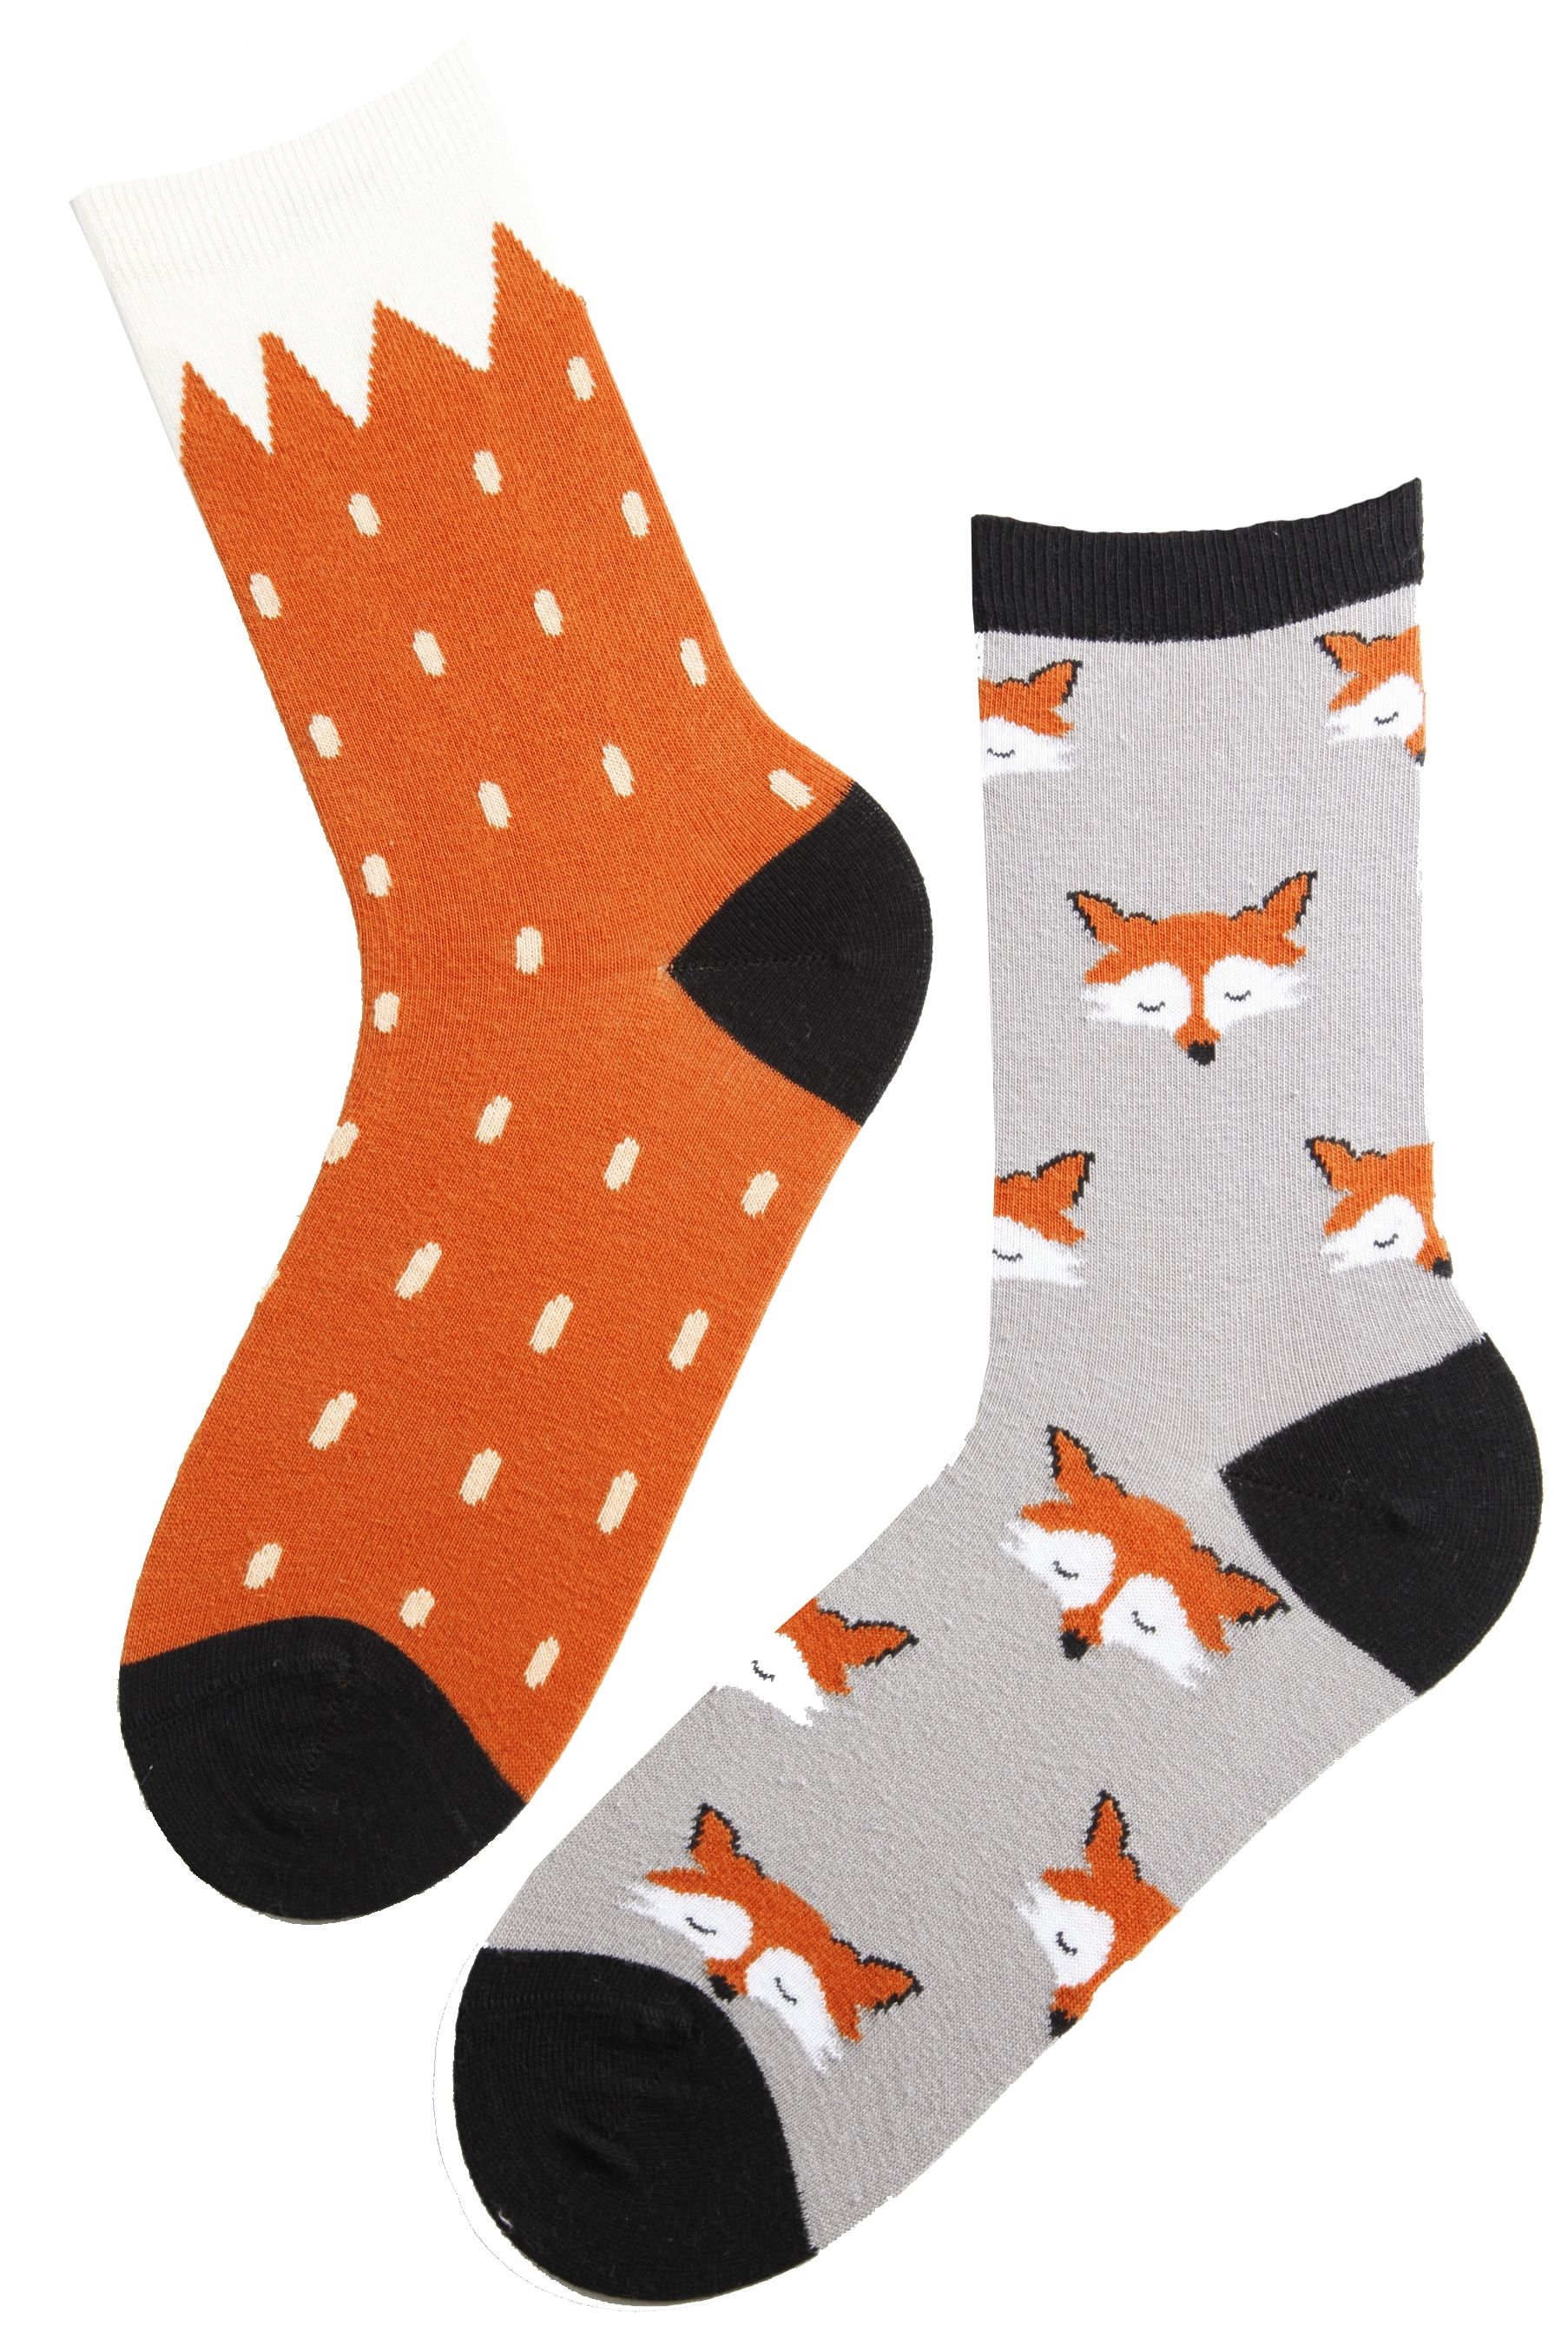 Foxes Orange Mens Novelty Ankle Socks Adult One Size 